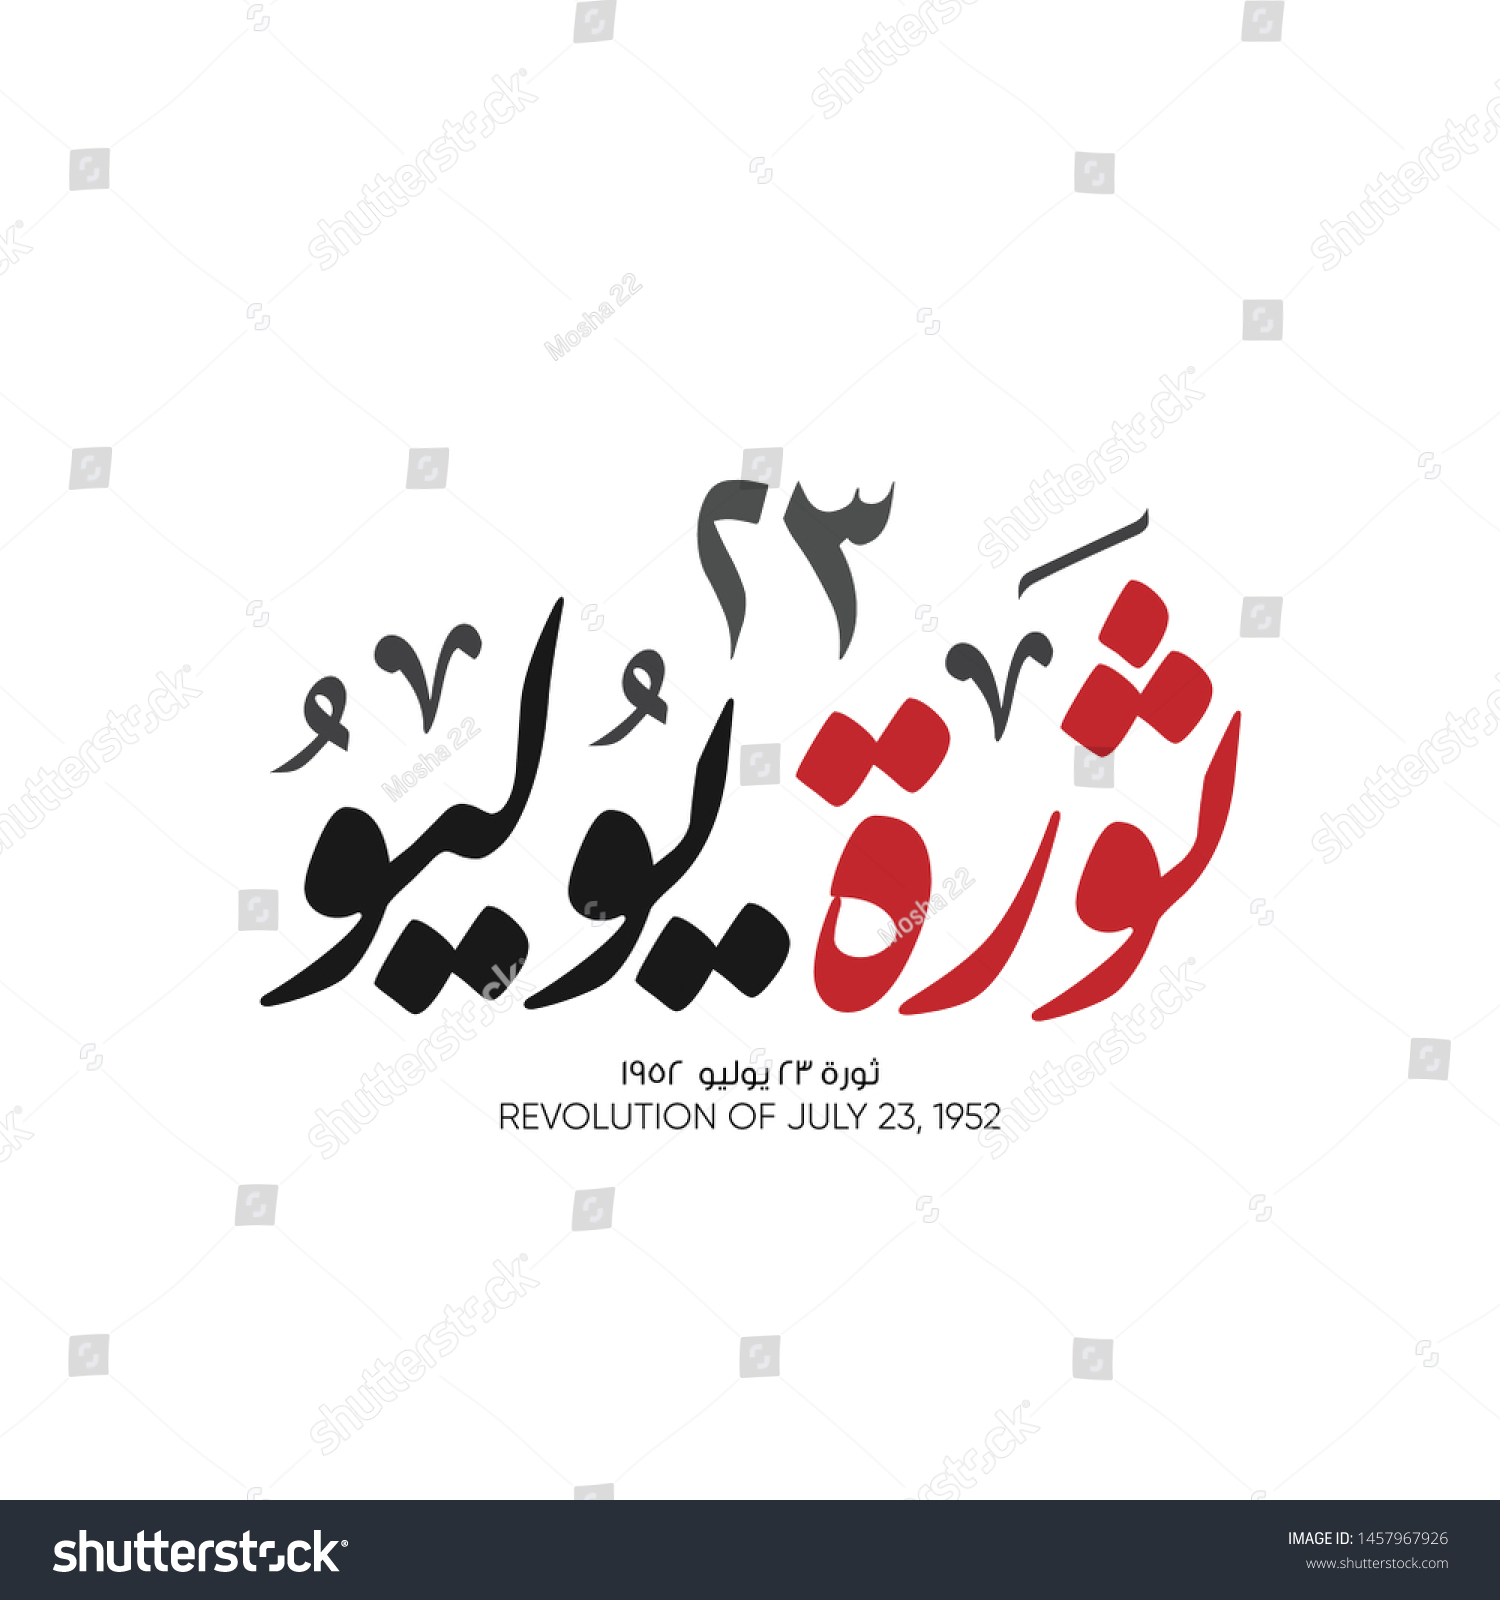 SVG of Egyptian revolution of July 23, 1952 - calligraphy Translation (July Revolution). Greeting Card vector 3 svg